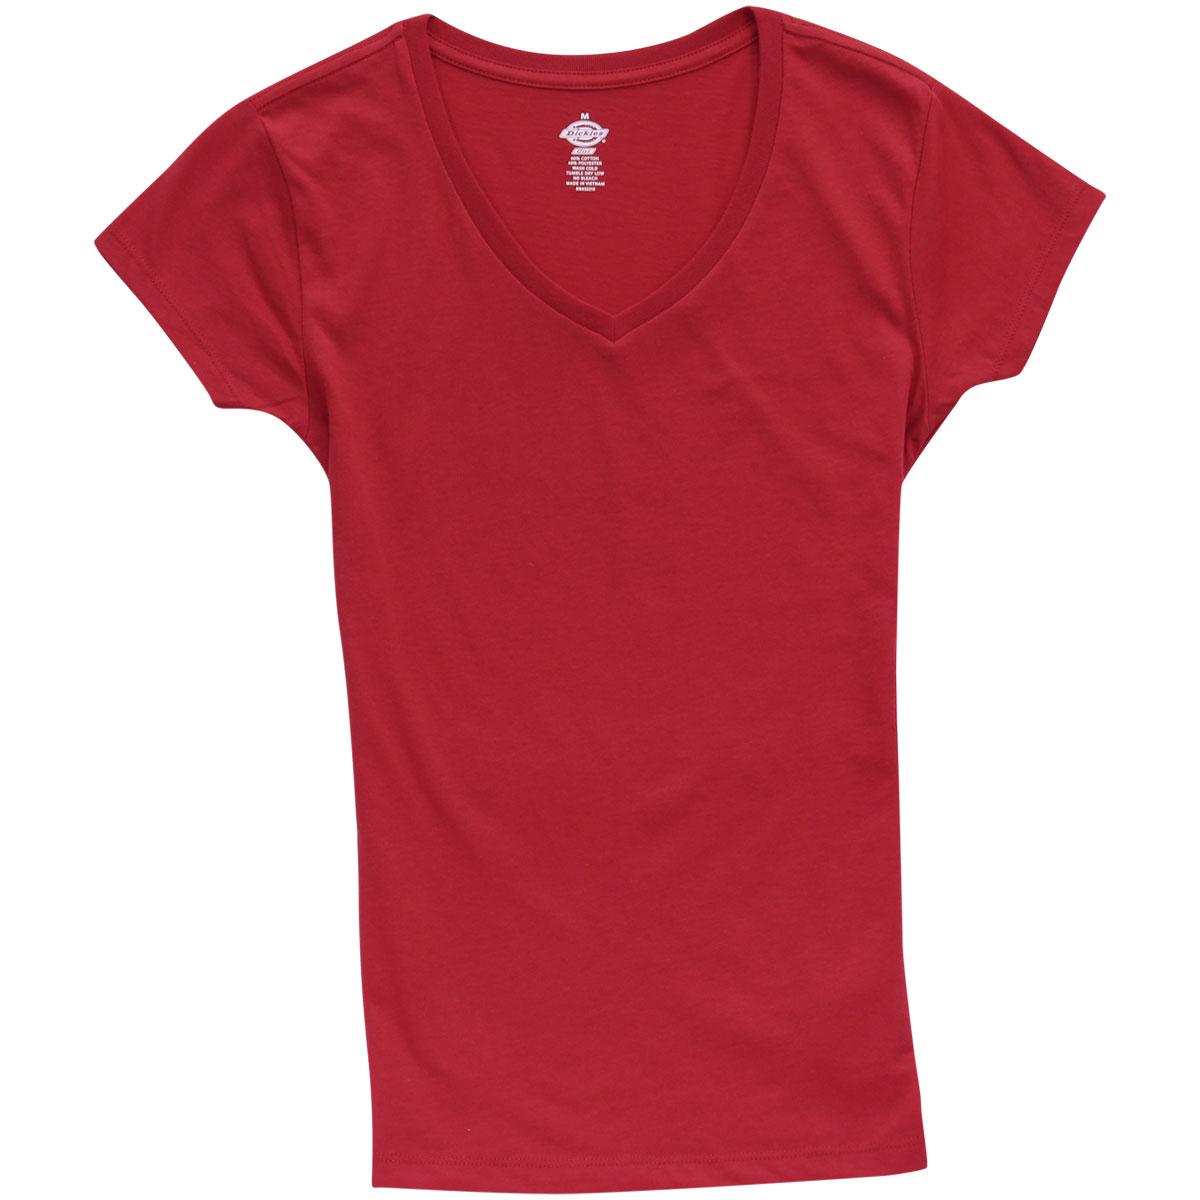 Dickies Girl Junior's Slim Fit Short Sleeve V Neck T Shirt - Red - X Large